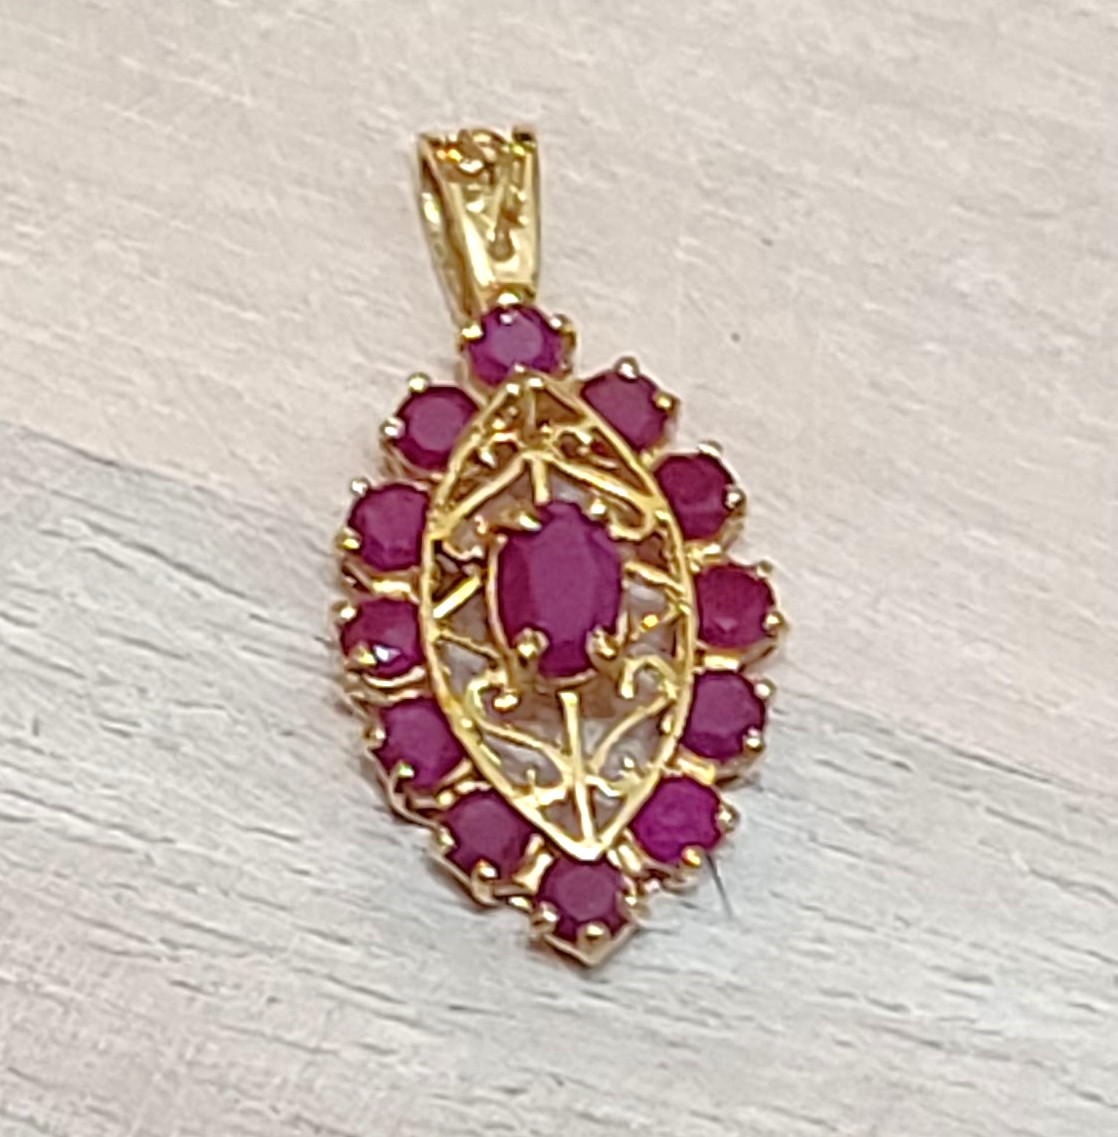 14K gold pendant with genuine ruby gemestones